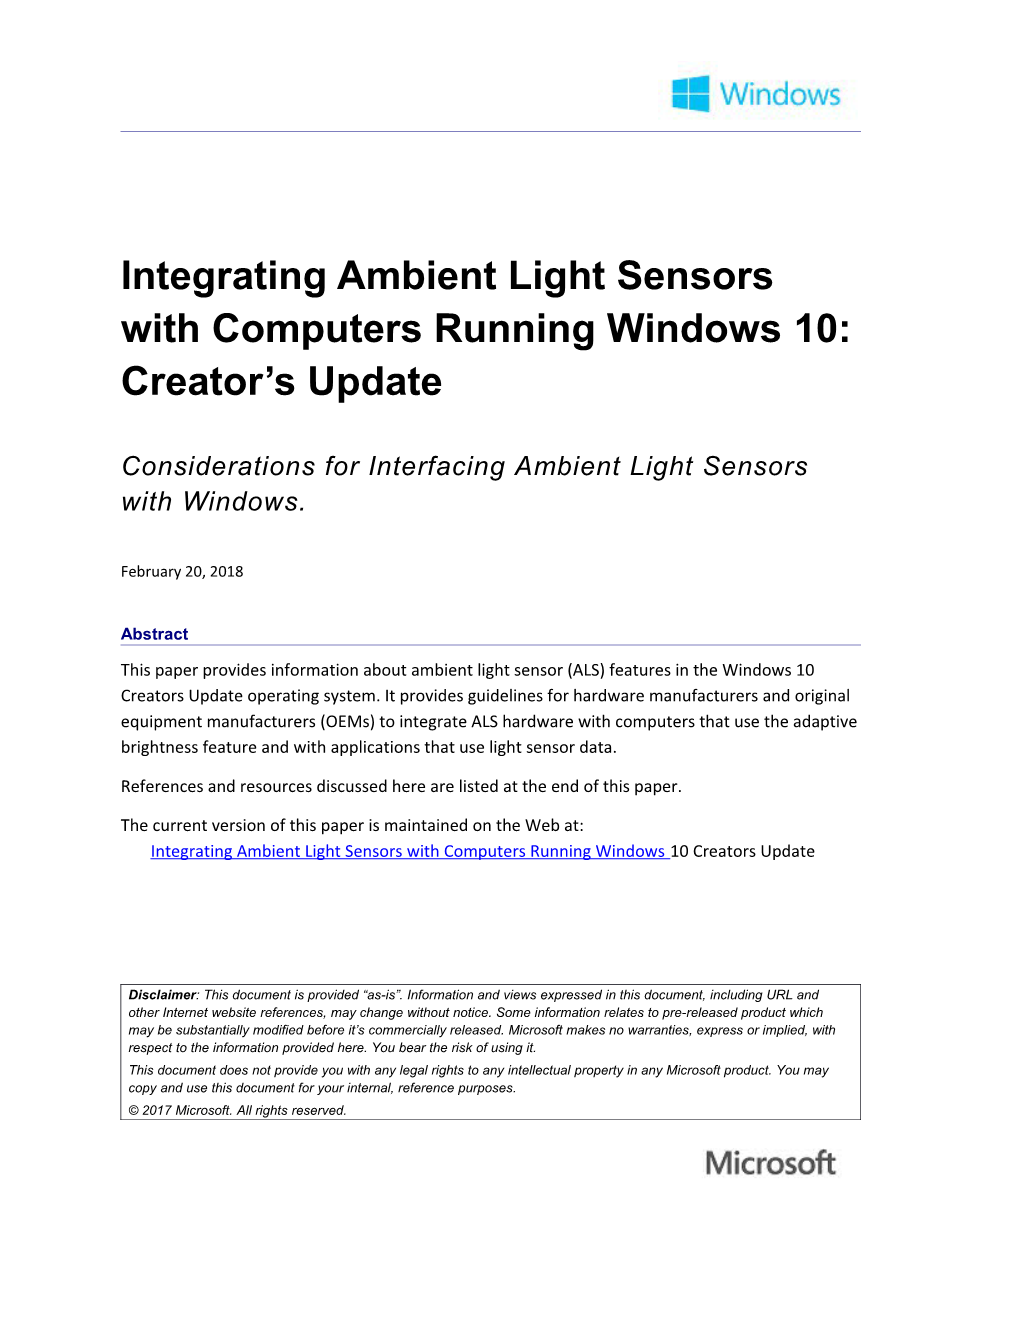 Integrating Ambient Light Sensors with Computers Running Windows 10 Creators Update